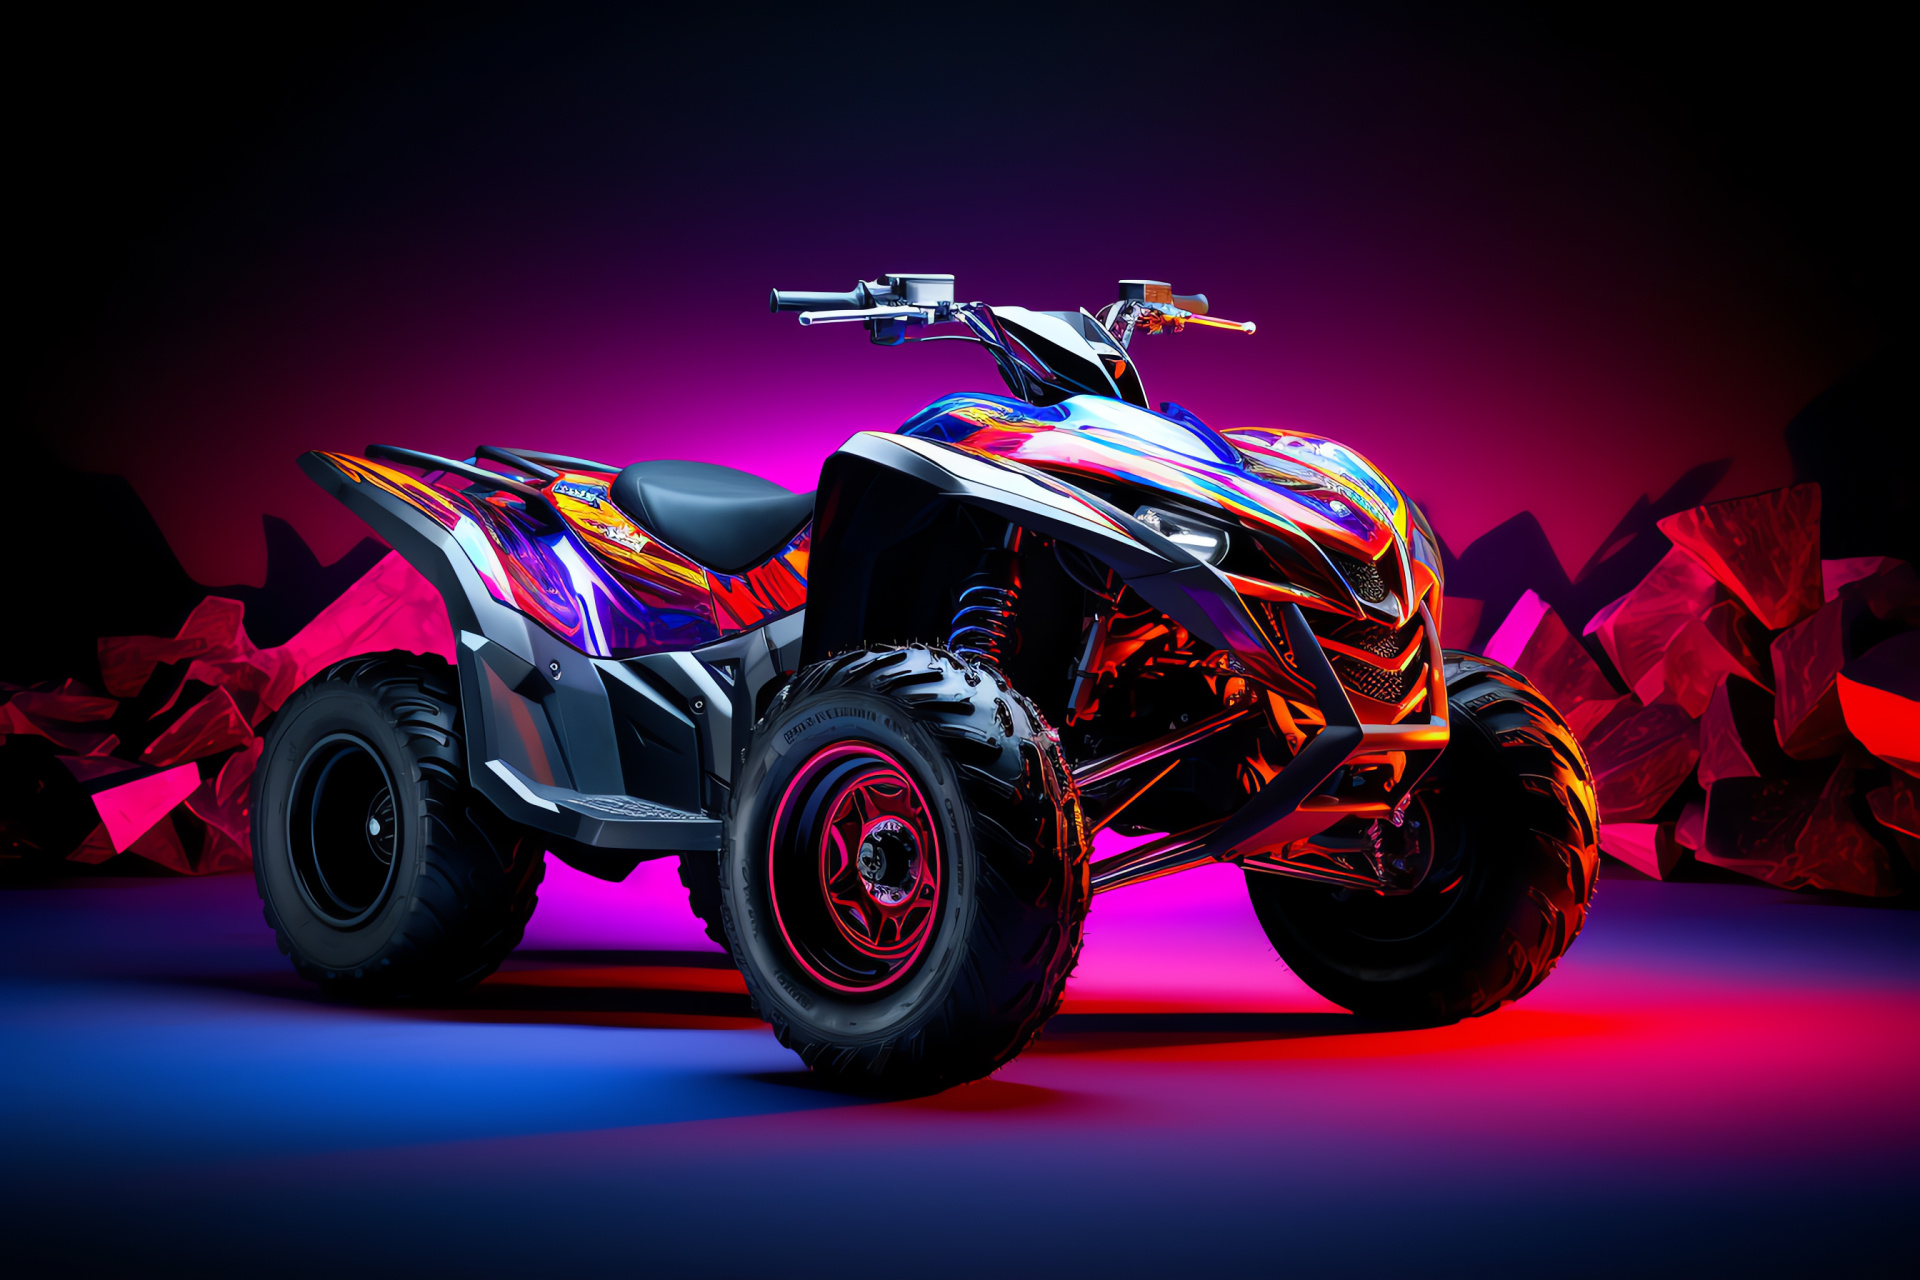 Raptor 700 ATV, Elevated Perspective, Striking Color Combination, Nighttime Lights, Extreme Riding Machine, HD Desktop Image